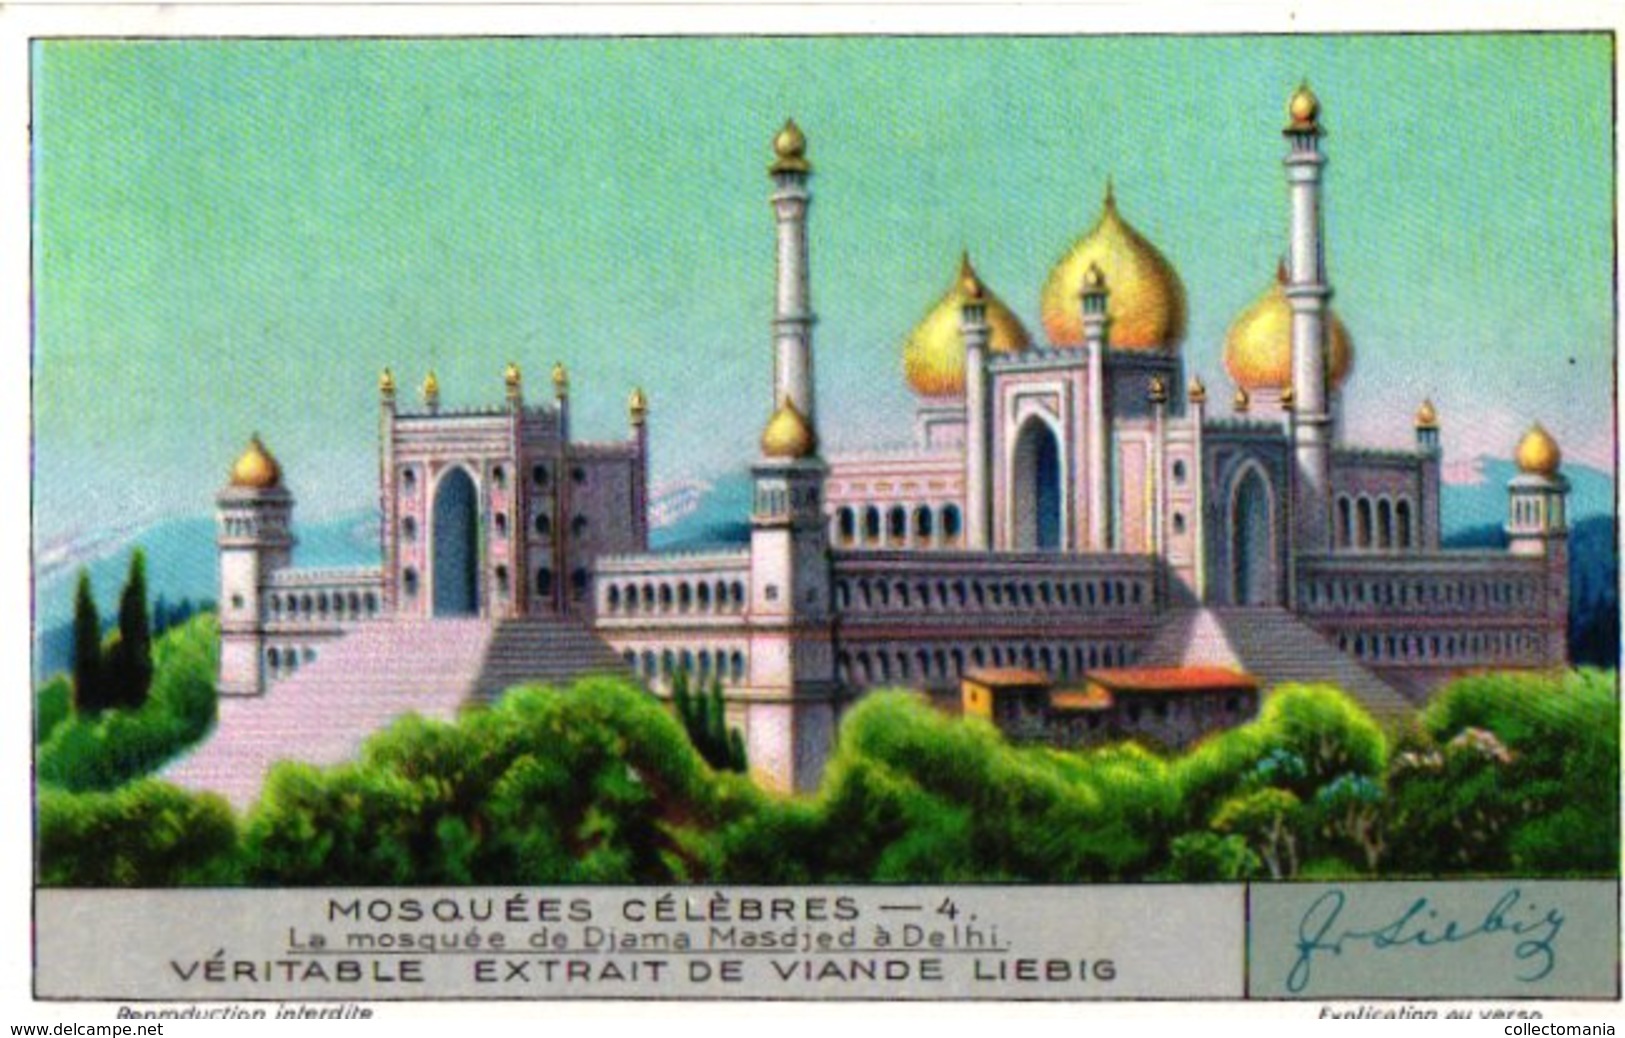 6 Trade Cards Liebig 1250 Mosquées Célèbres Beroemde moskeeën Omar  Agra Delhi Kaaba La Mecque Mekka Aya Sophia